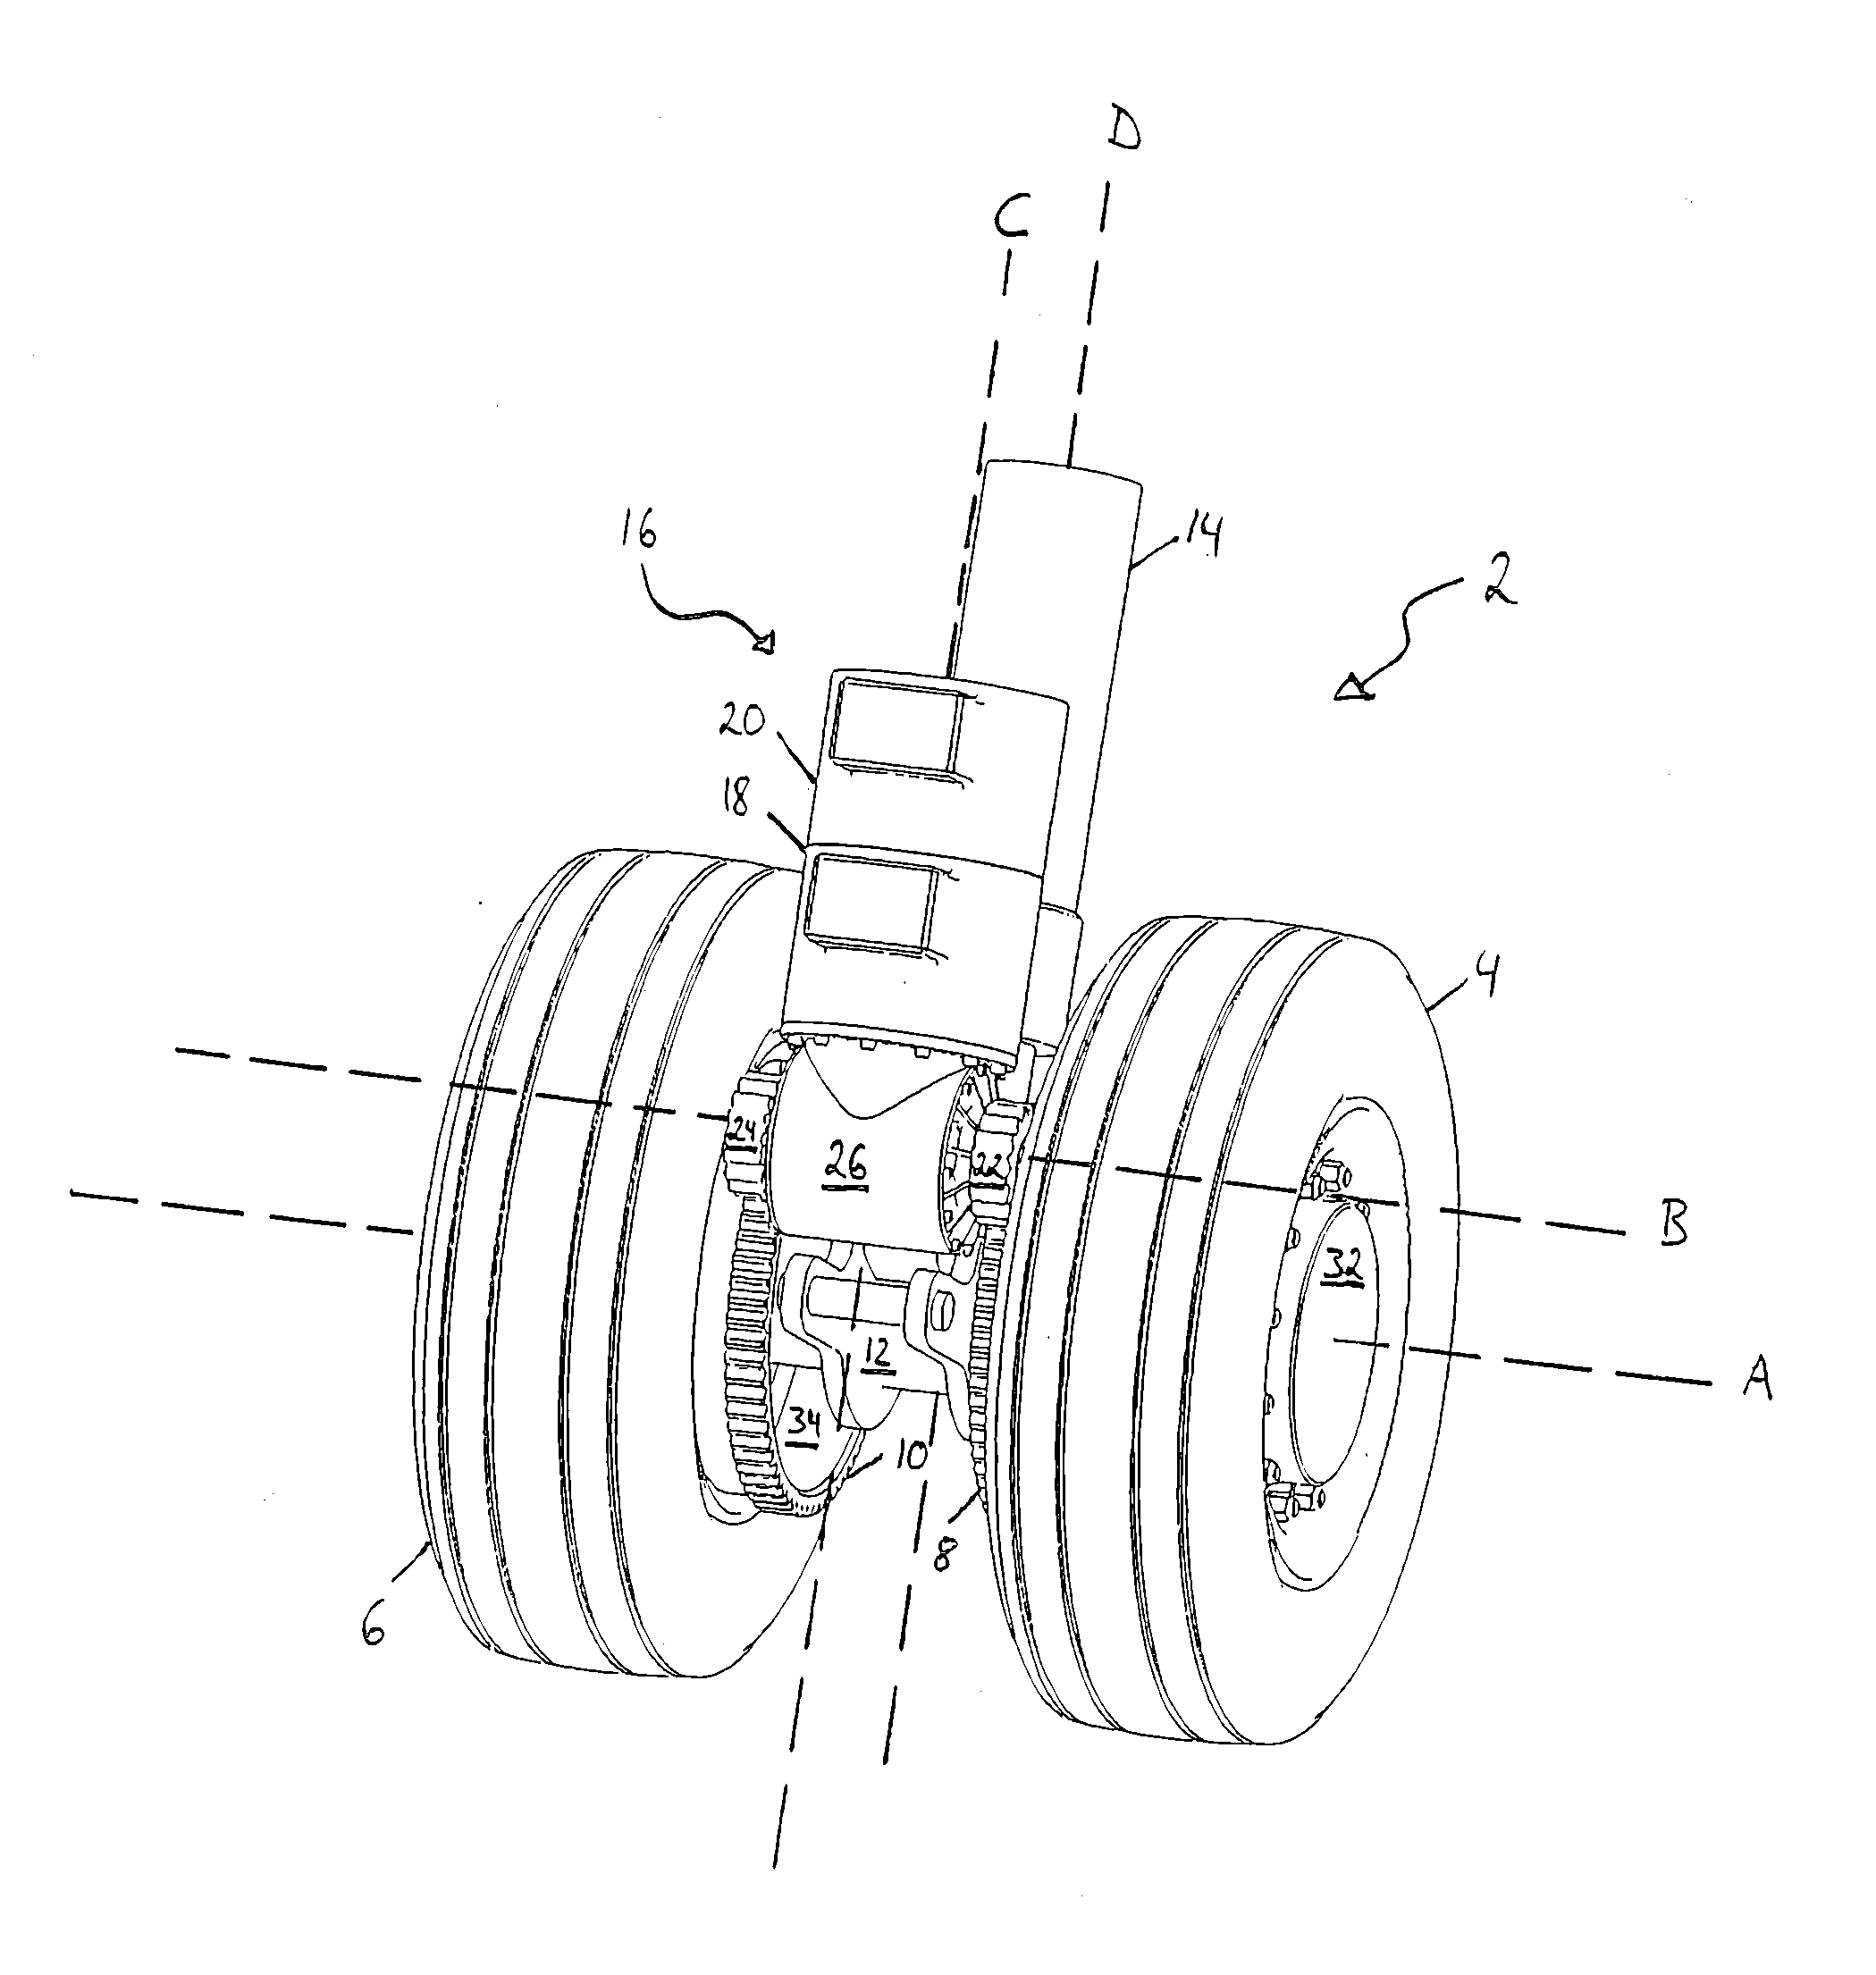 Drive unit for aircraft running gear wheels